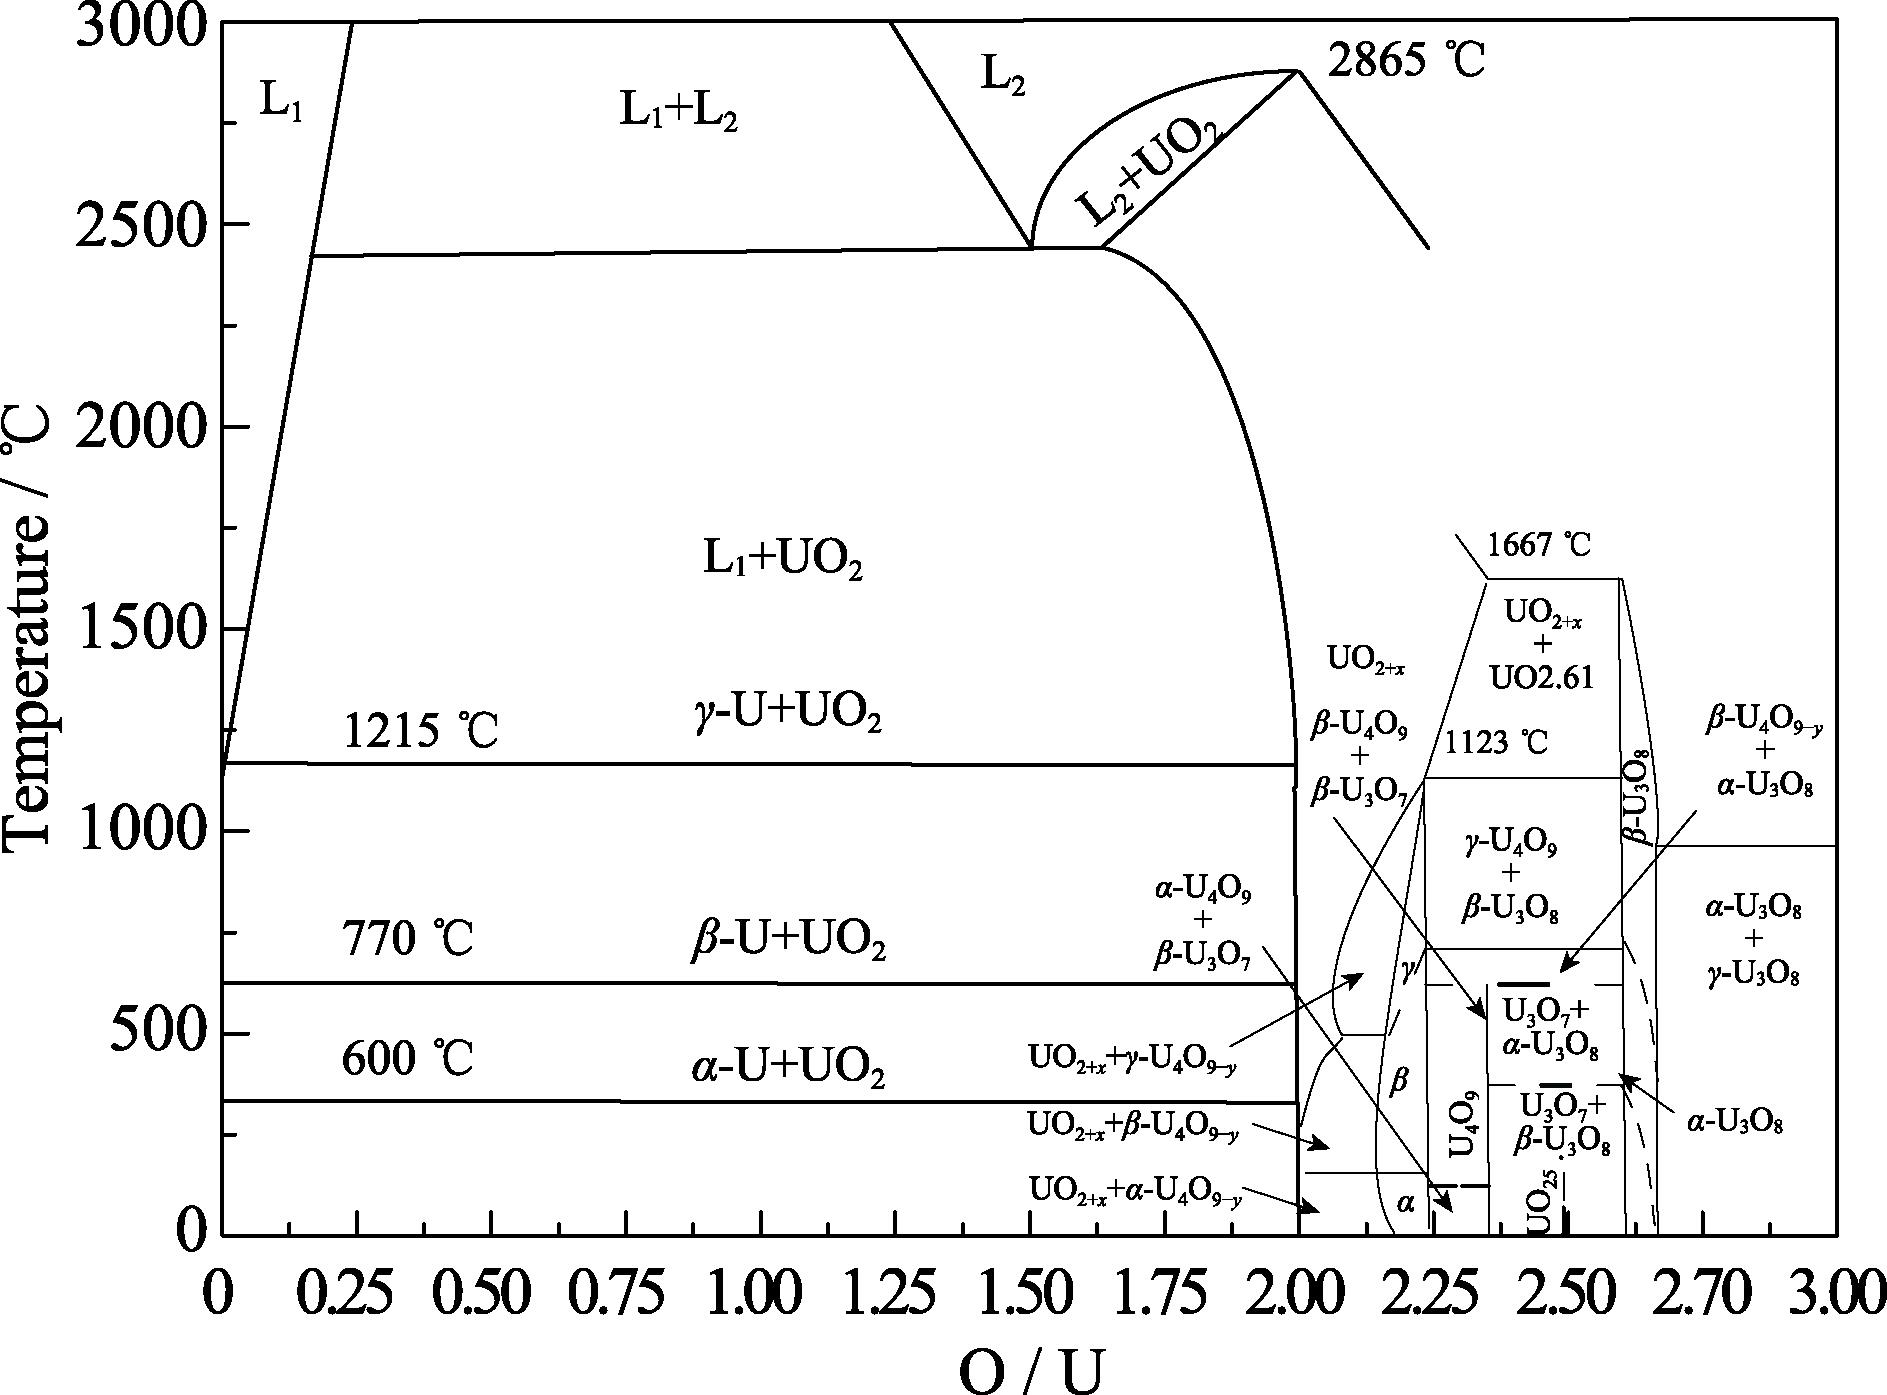 The phase diagram of U-O[15,16,17]